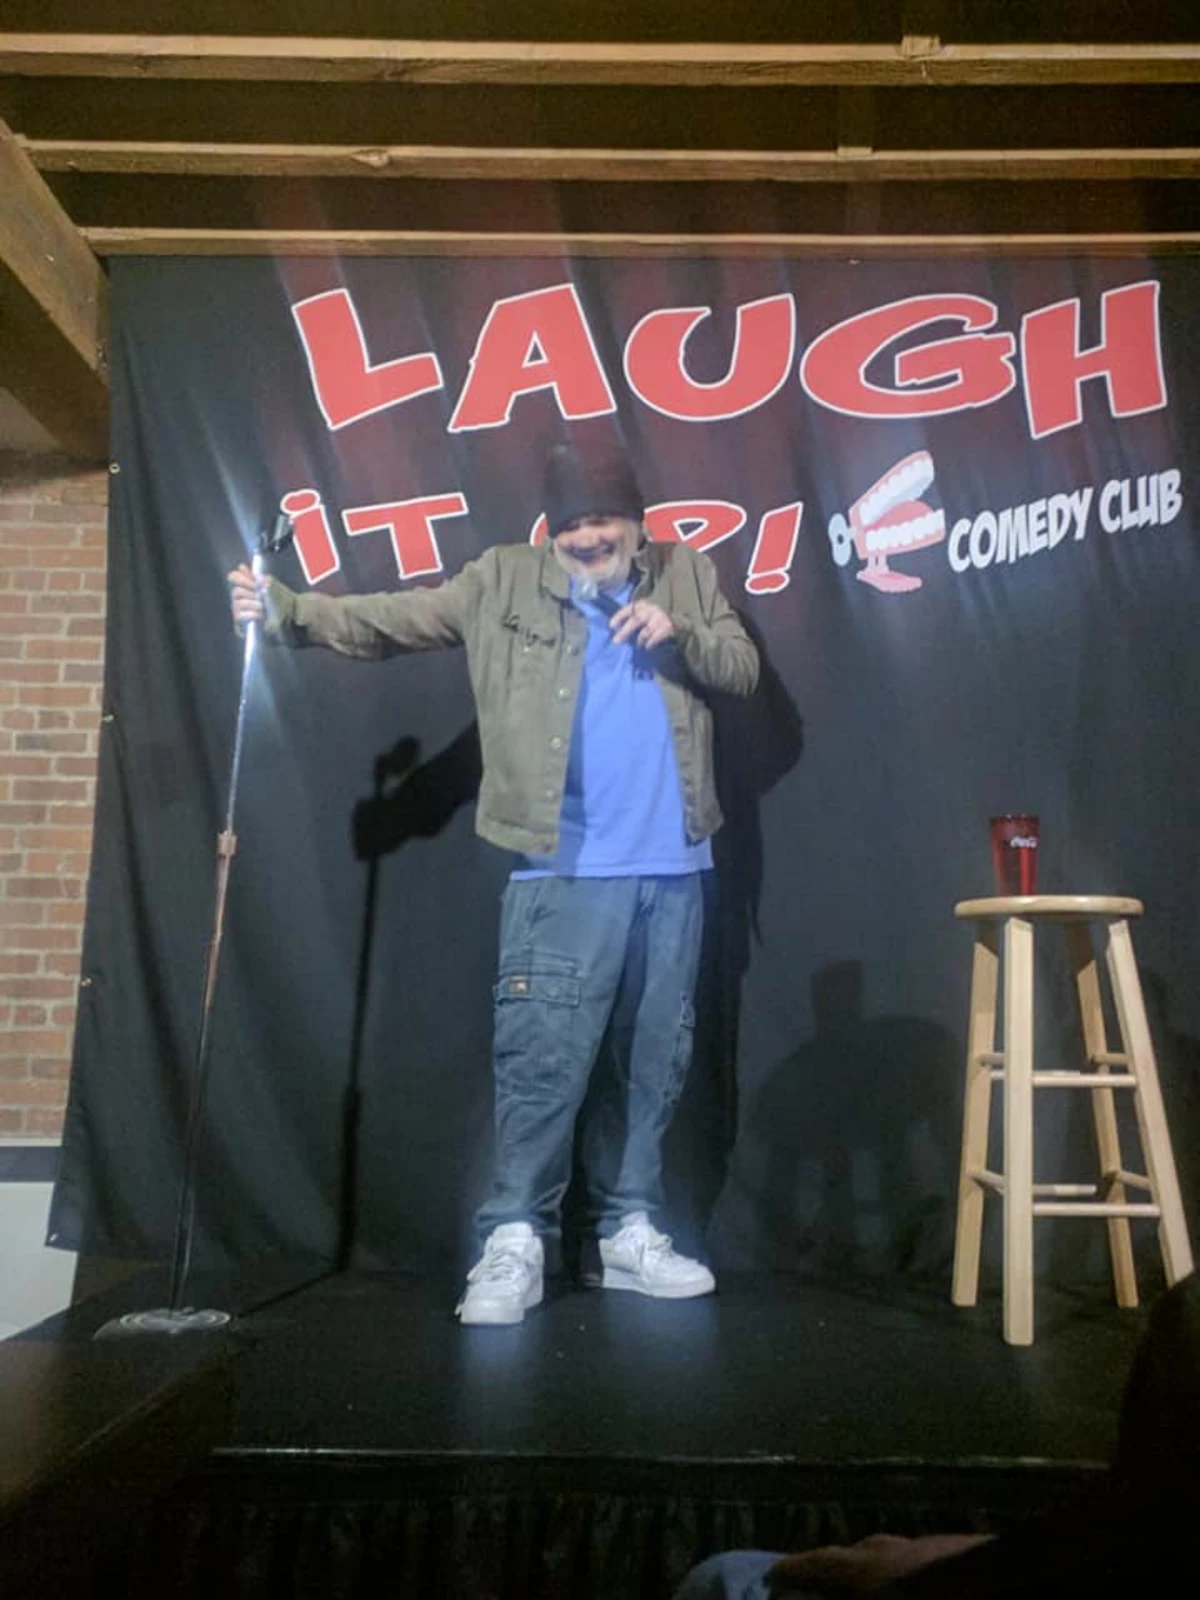 Popular Poughkeepsie Comedy Club Relocates...Yet Again